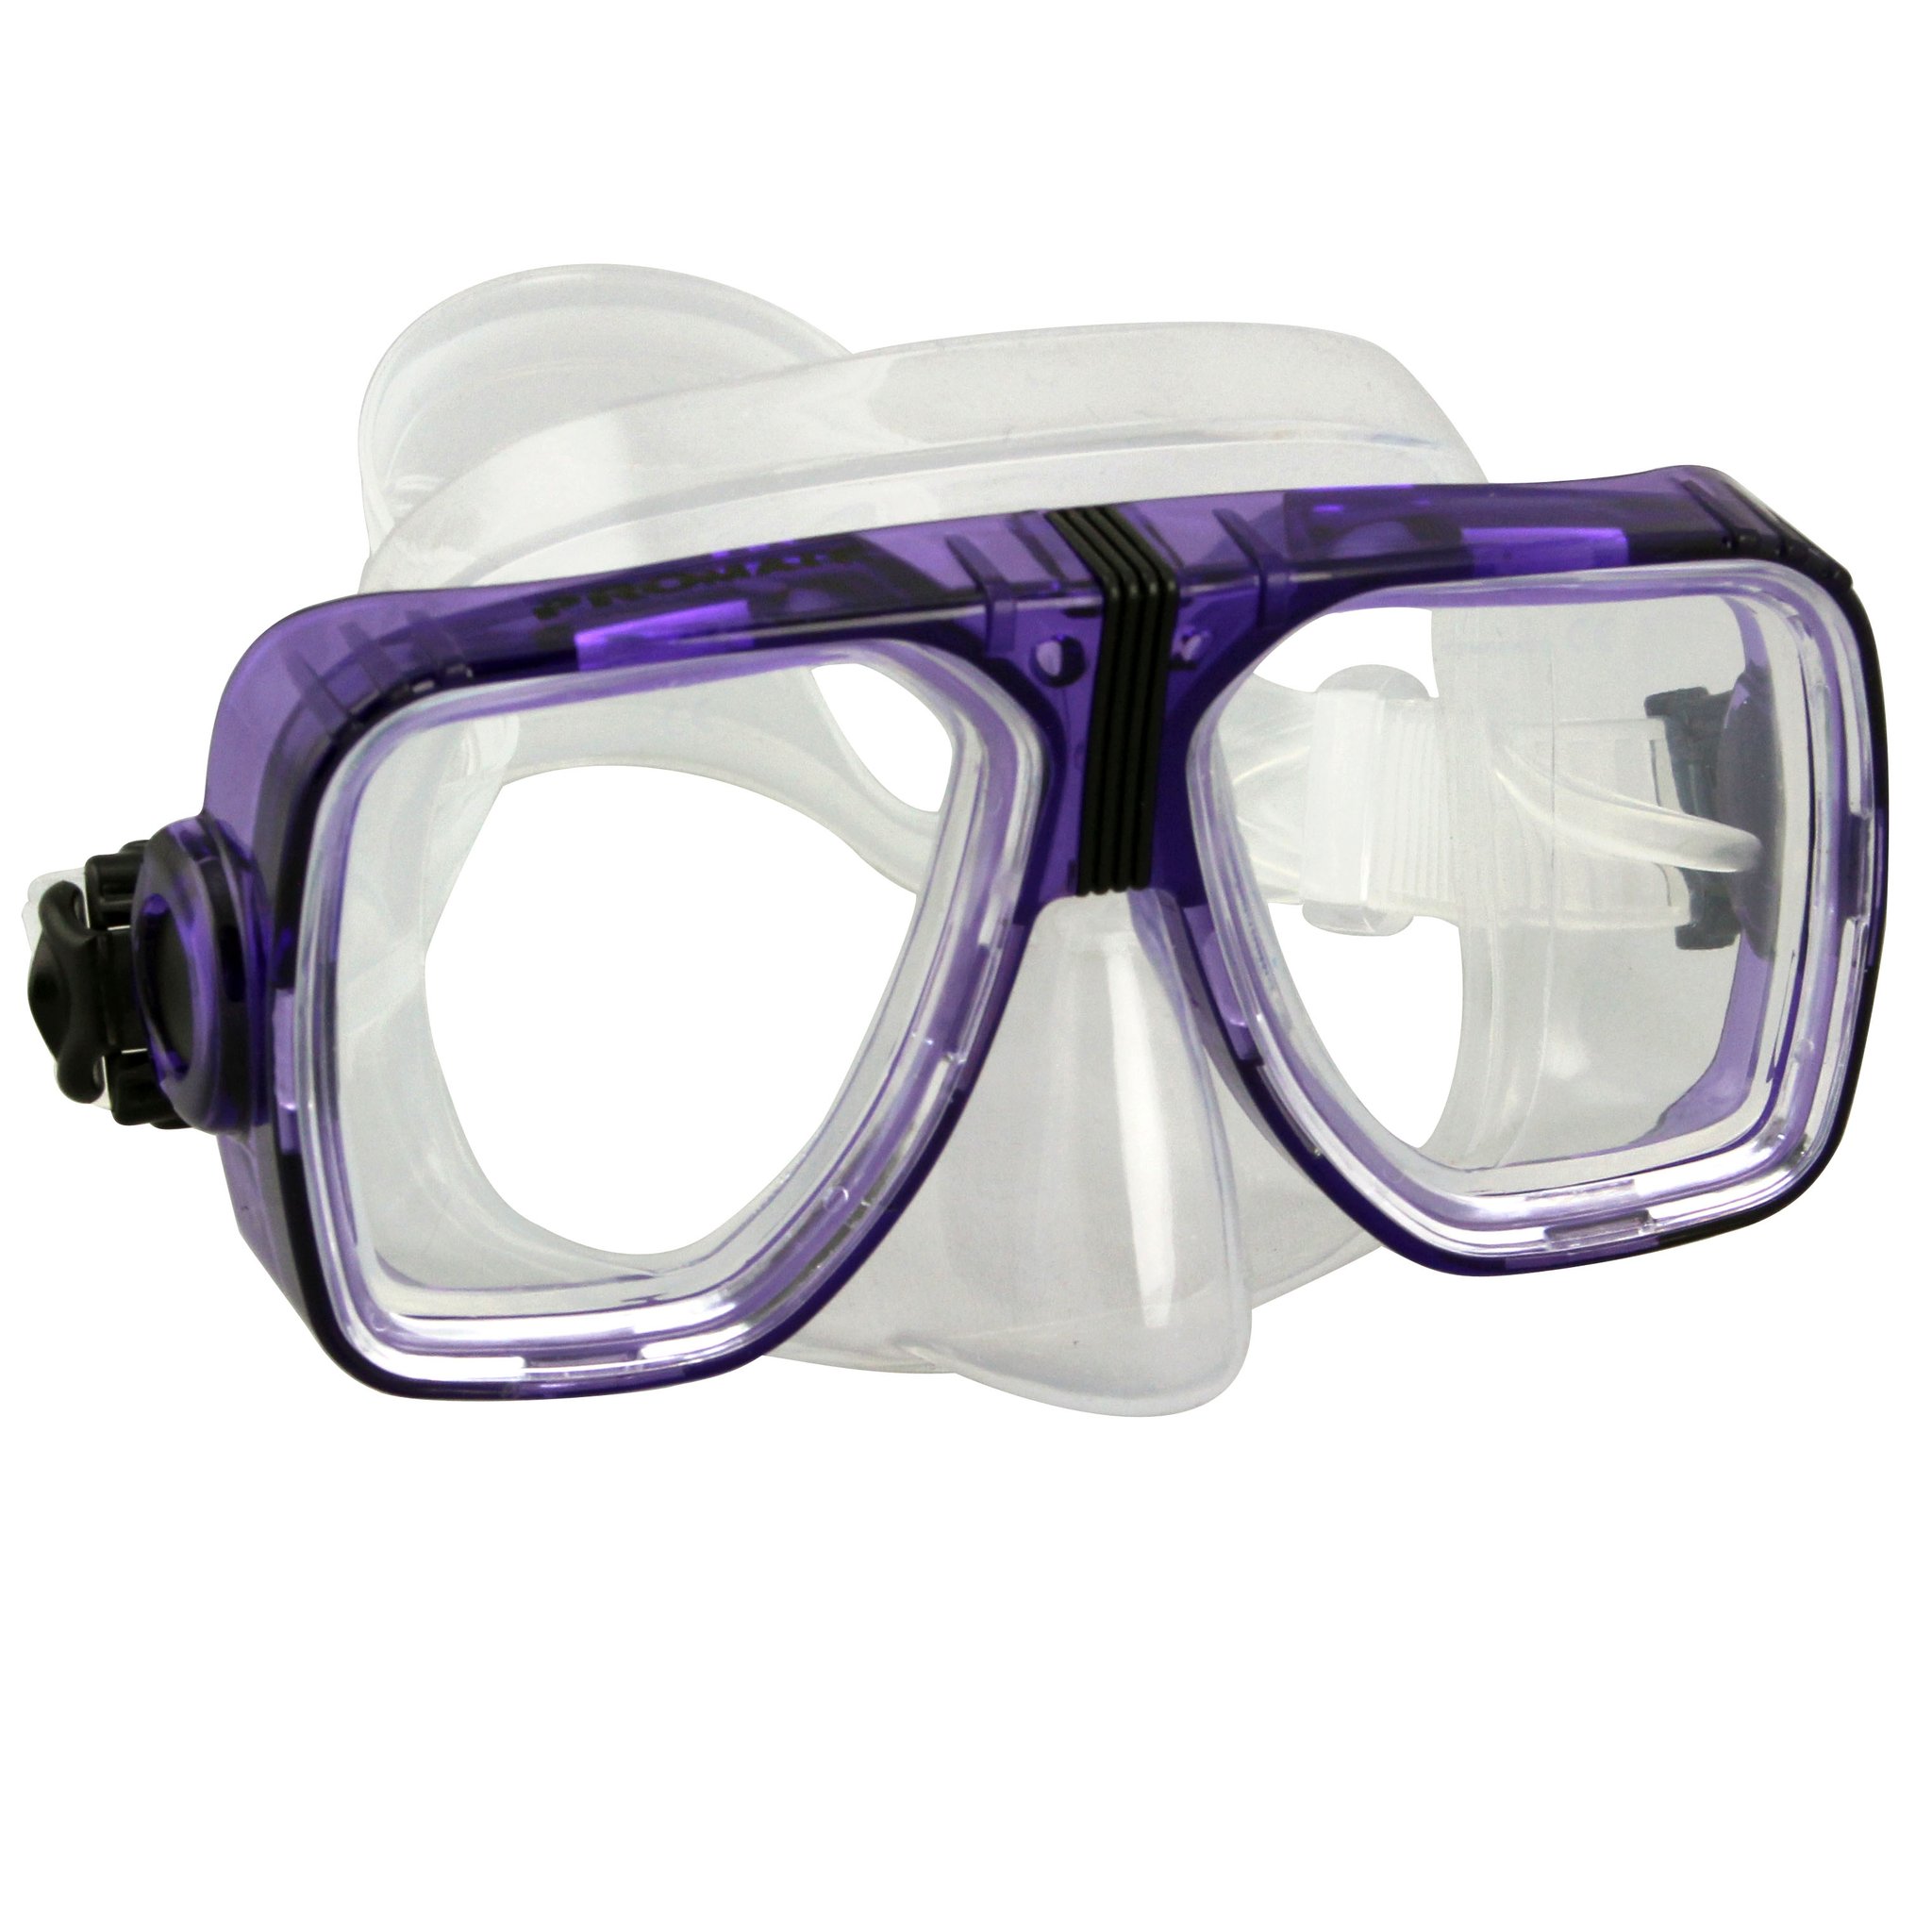 Promate Scope Prescription Dive Mask for Scuba Diving and Snorkeling, Purple-5.0 - image 1 of 2